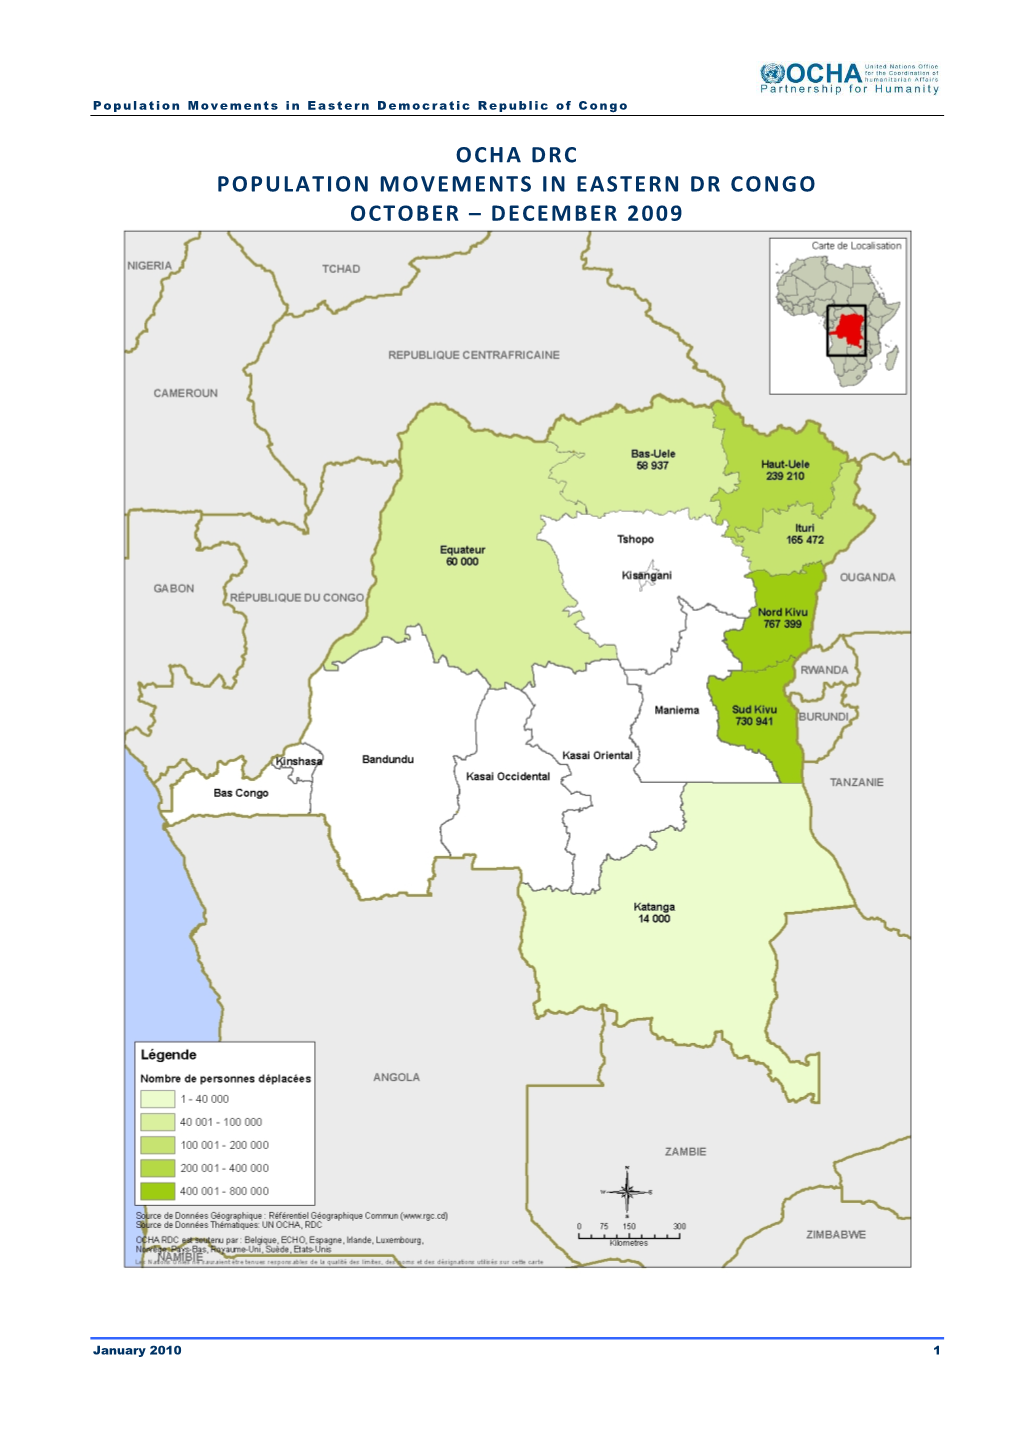 Ocha Drc Population Movements in Eastern Dr Congo October – December 2009